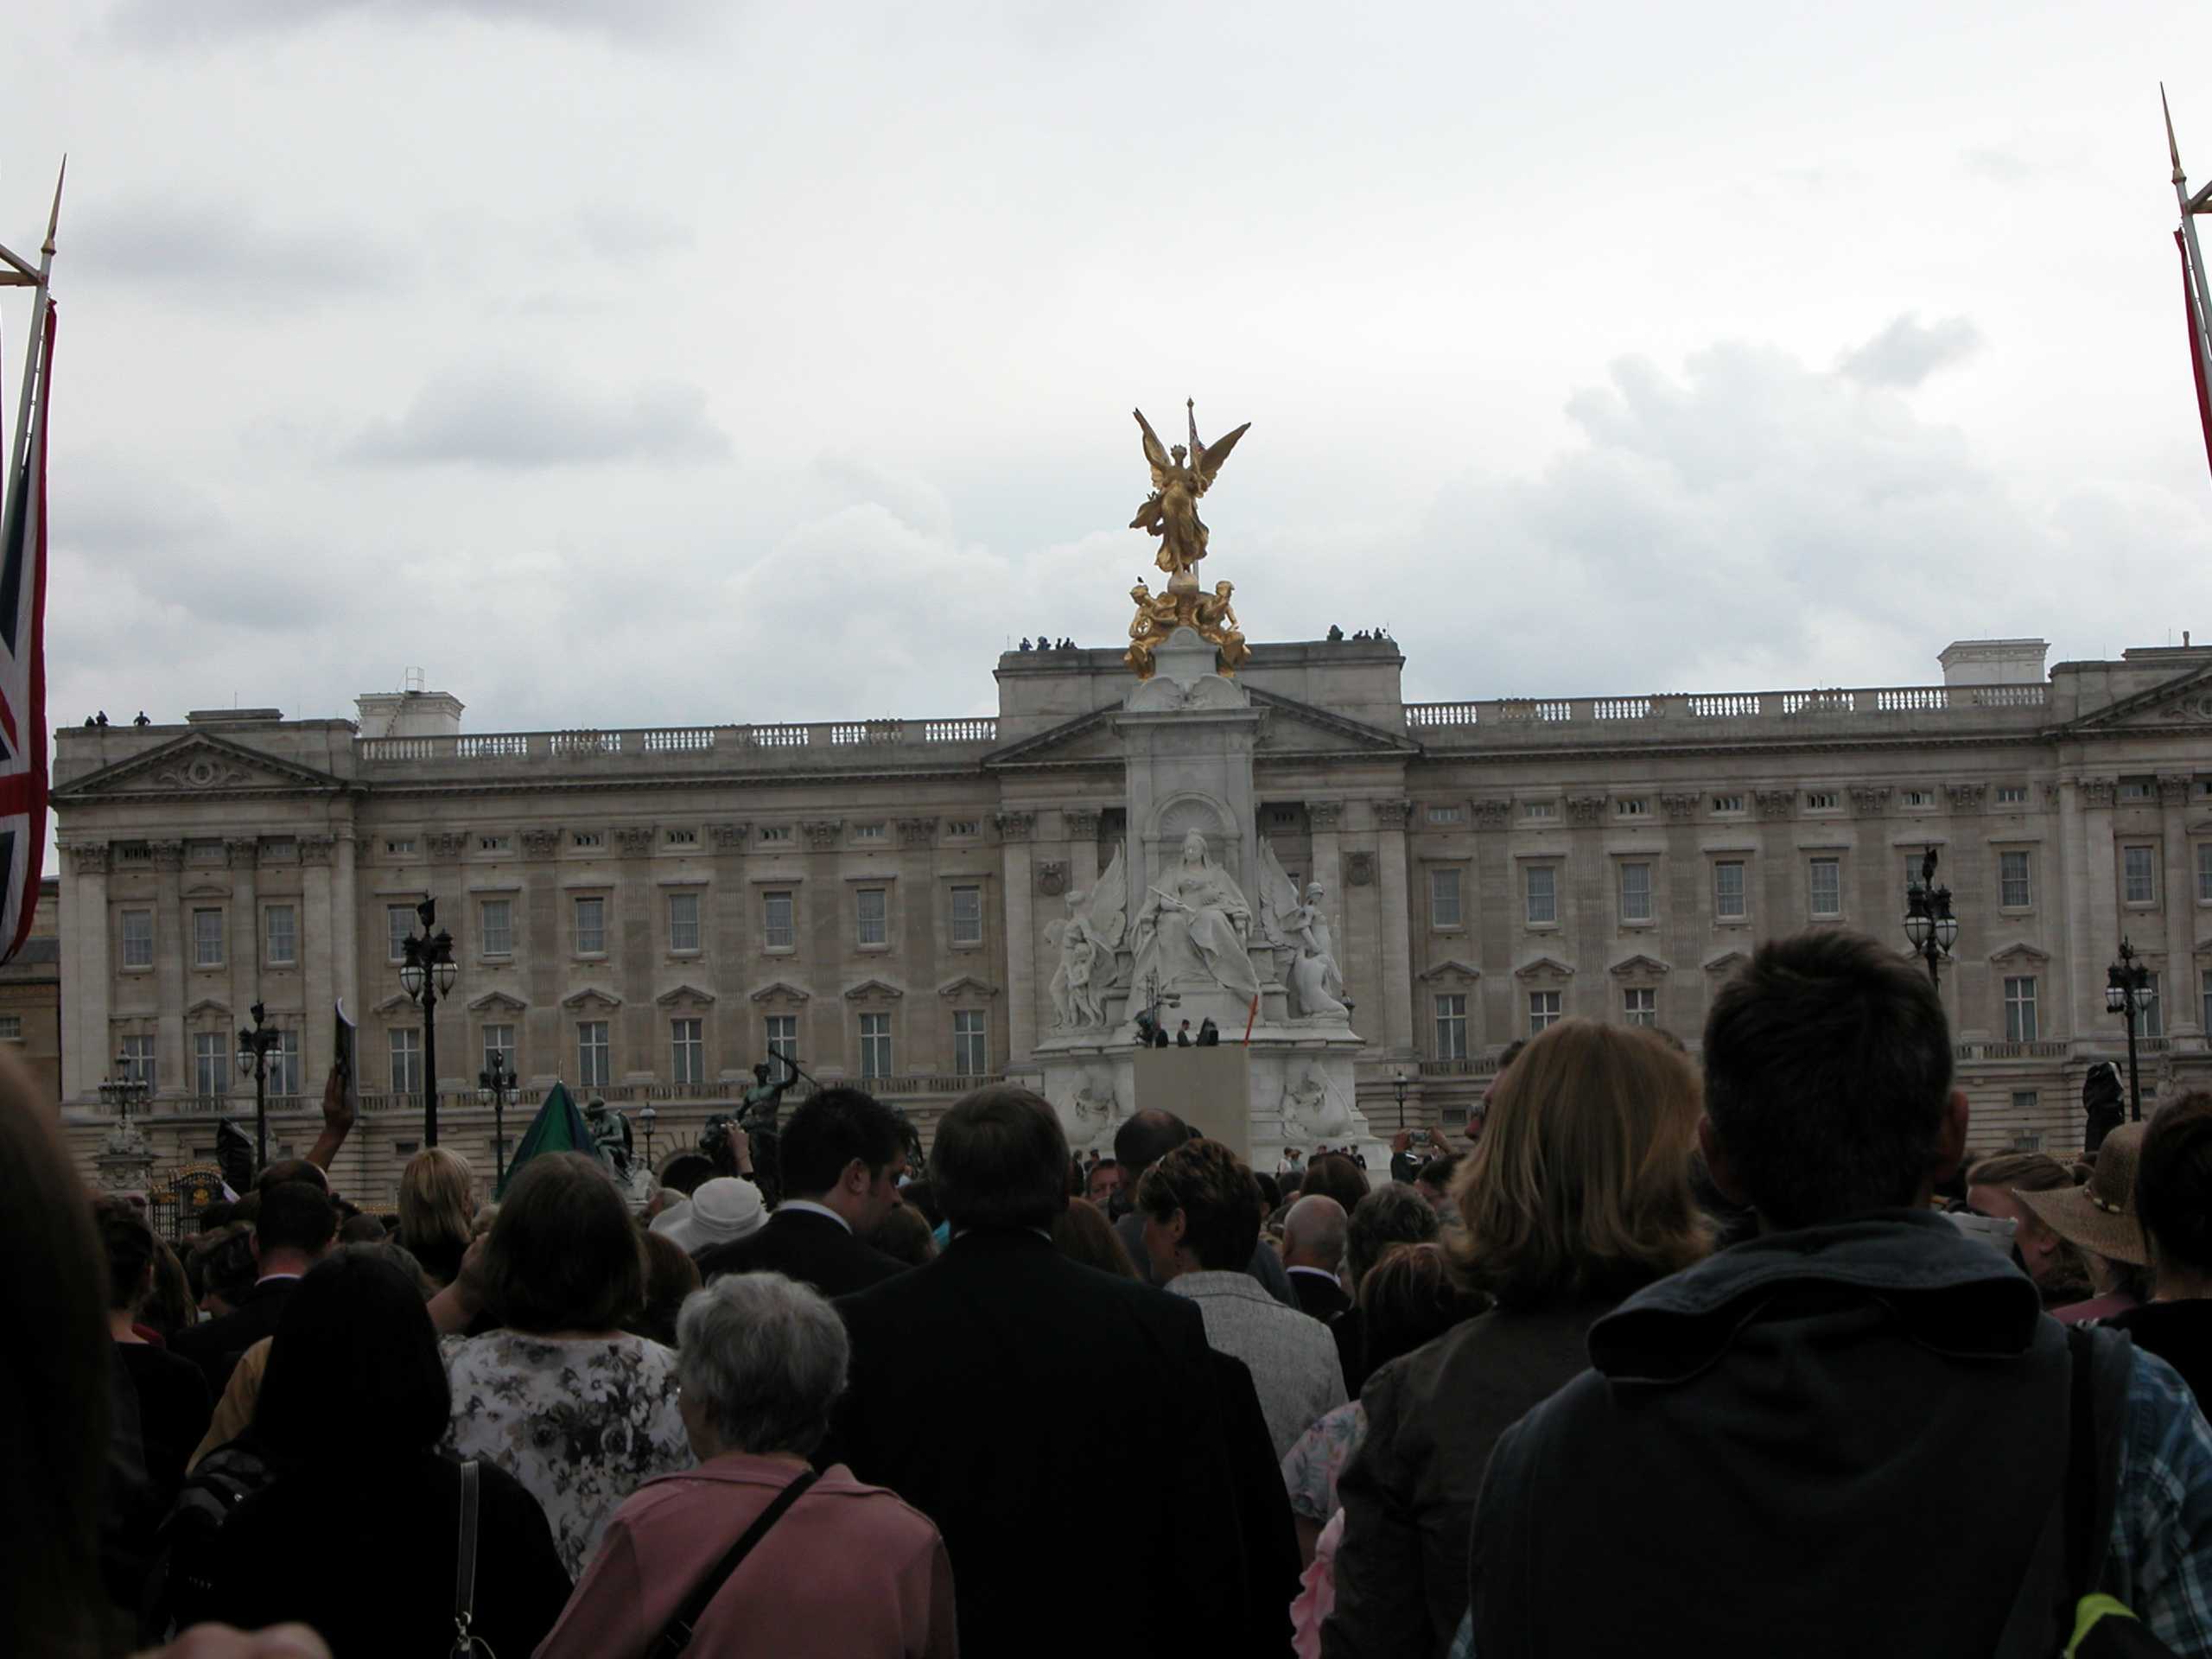 Buckingham Palace 17 June 2007